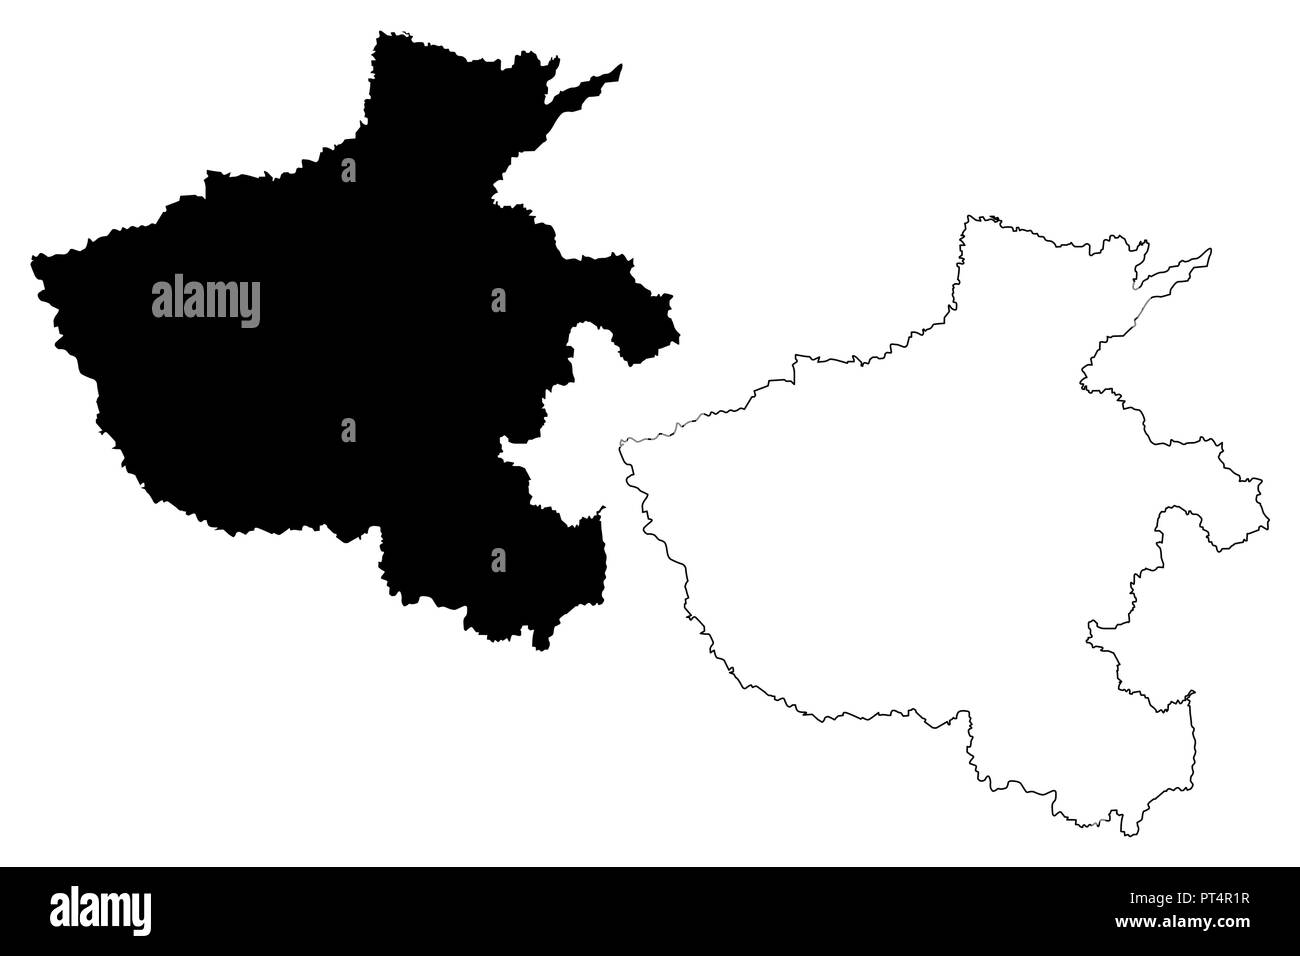 Provinz Henan (administrative divisions von China, China, Volksrepublik China, VR China) Karte Vektor-illustration, kritzeln Skizze Zhongyuan oder Zhong Stock Vektor